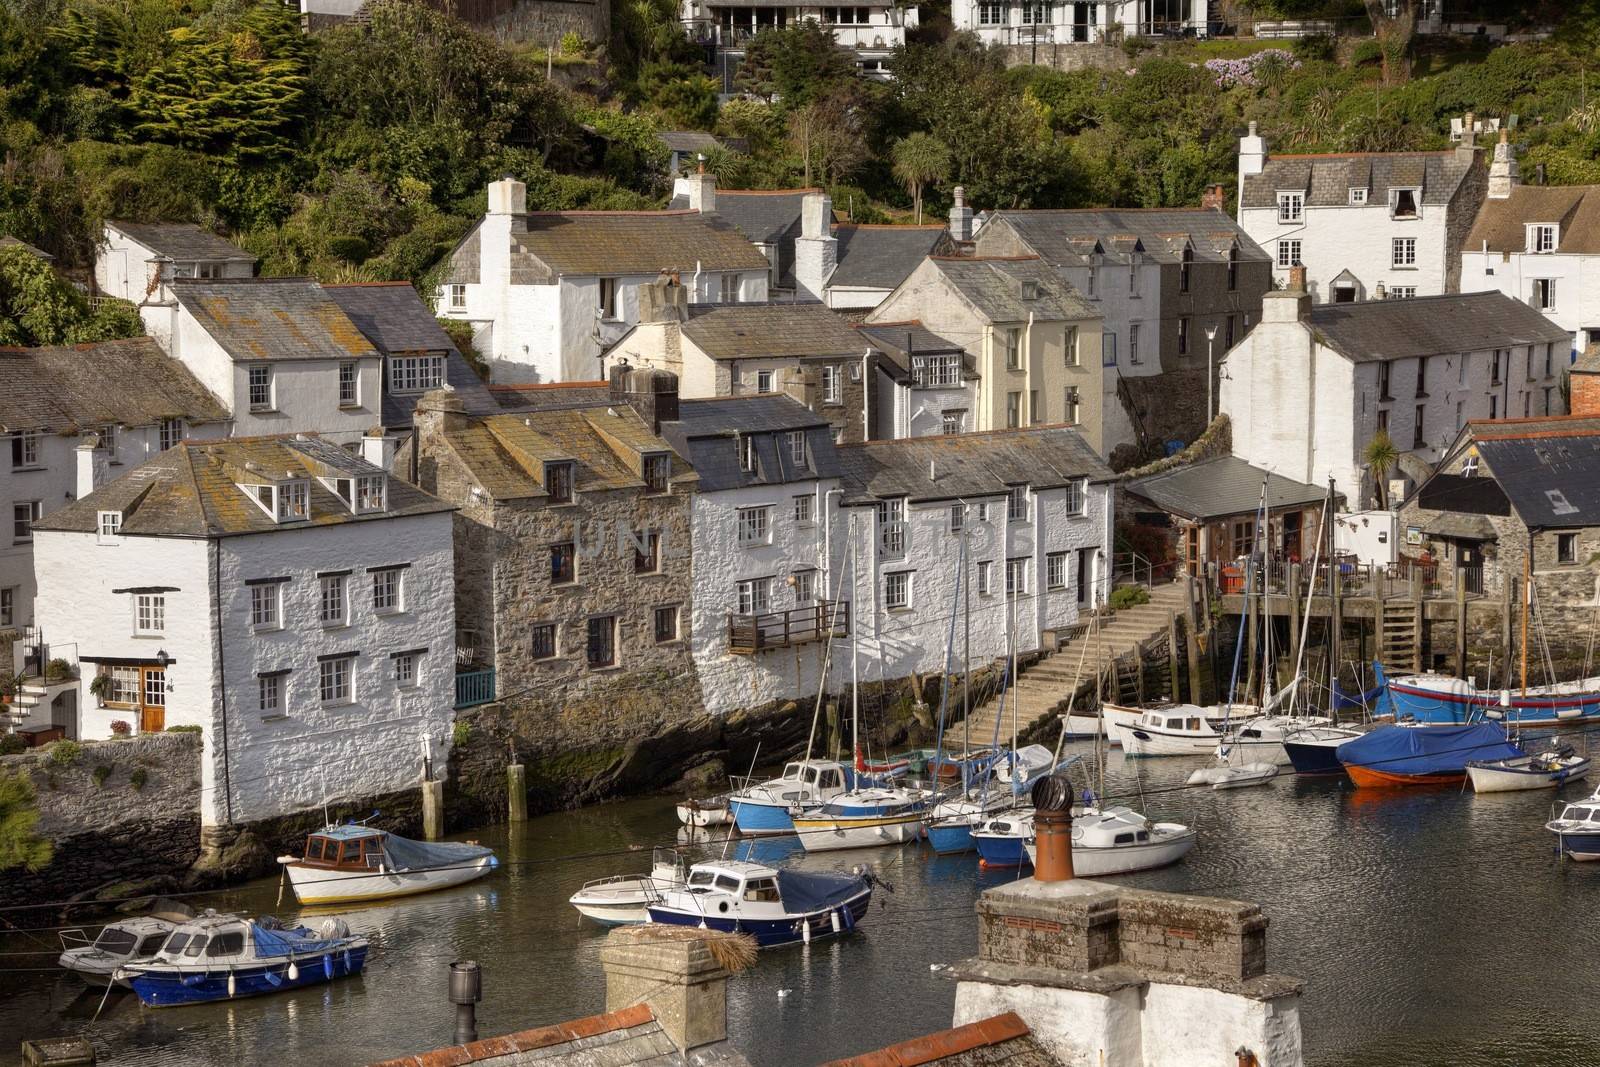 The historic fishing village of Polperro, Cornwall, England.